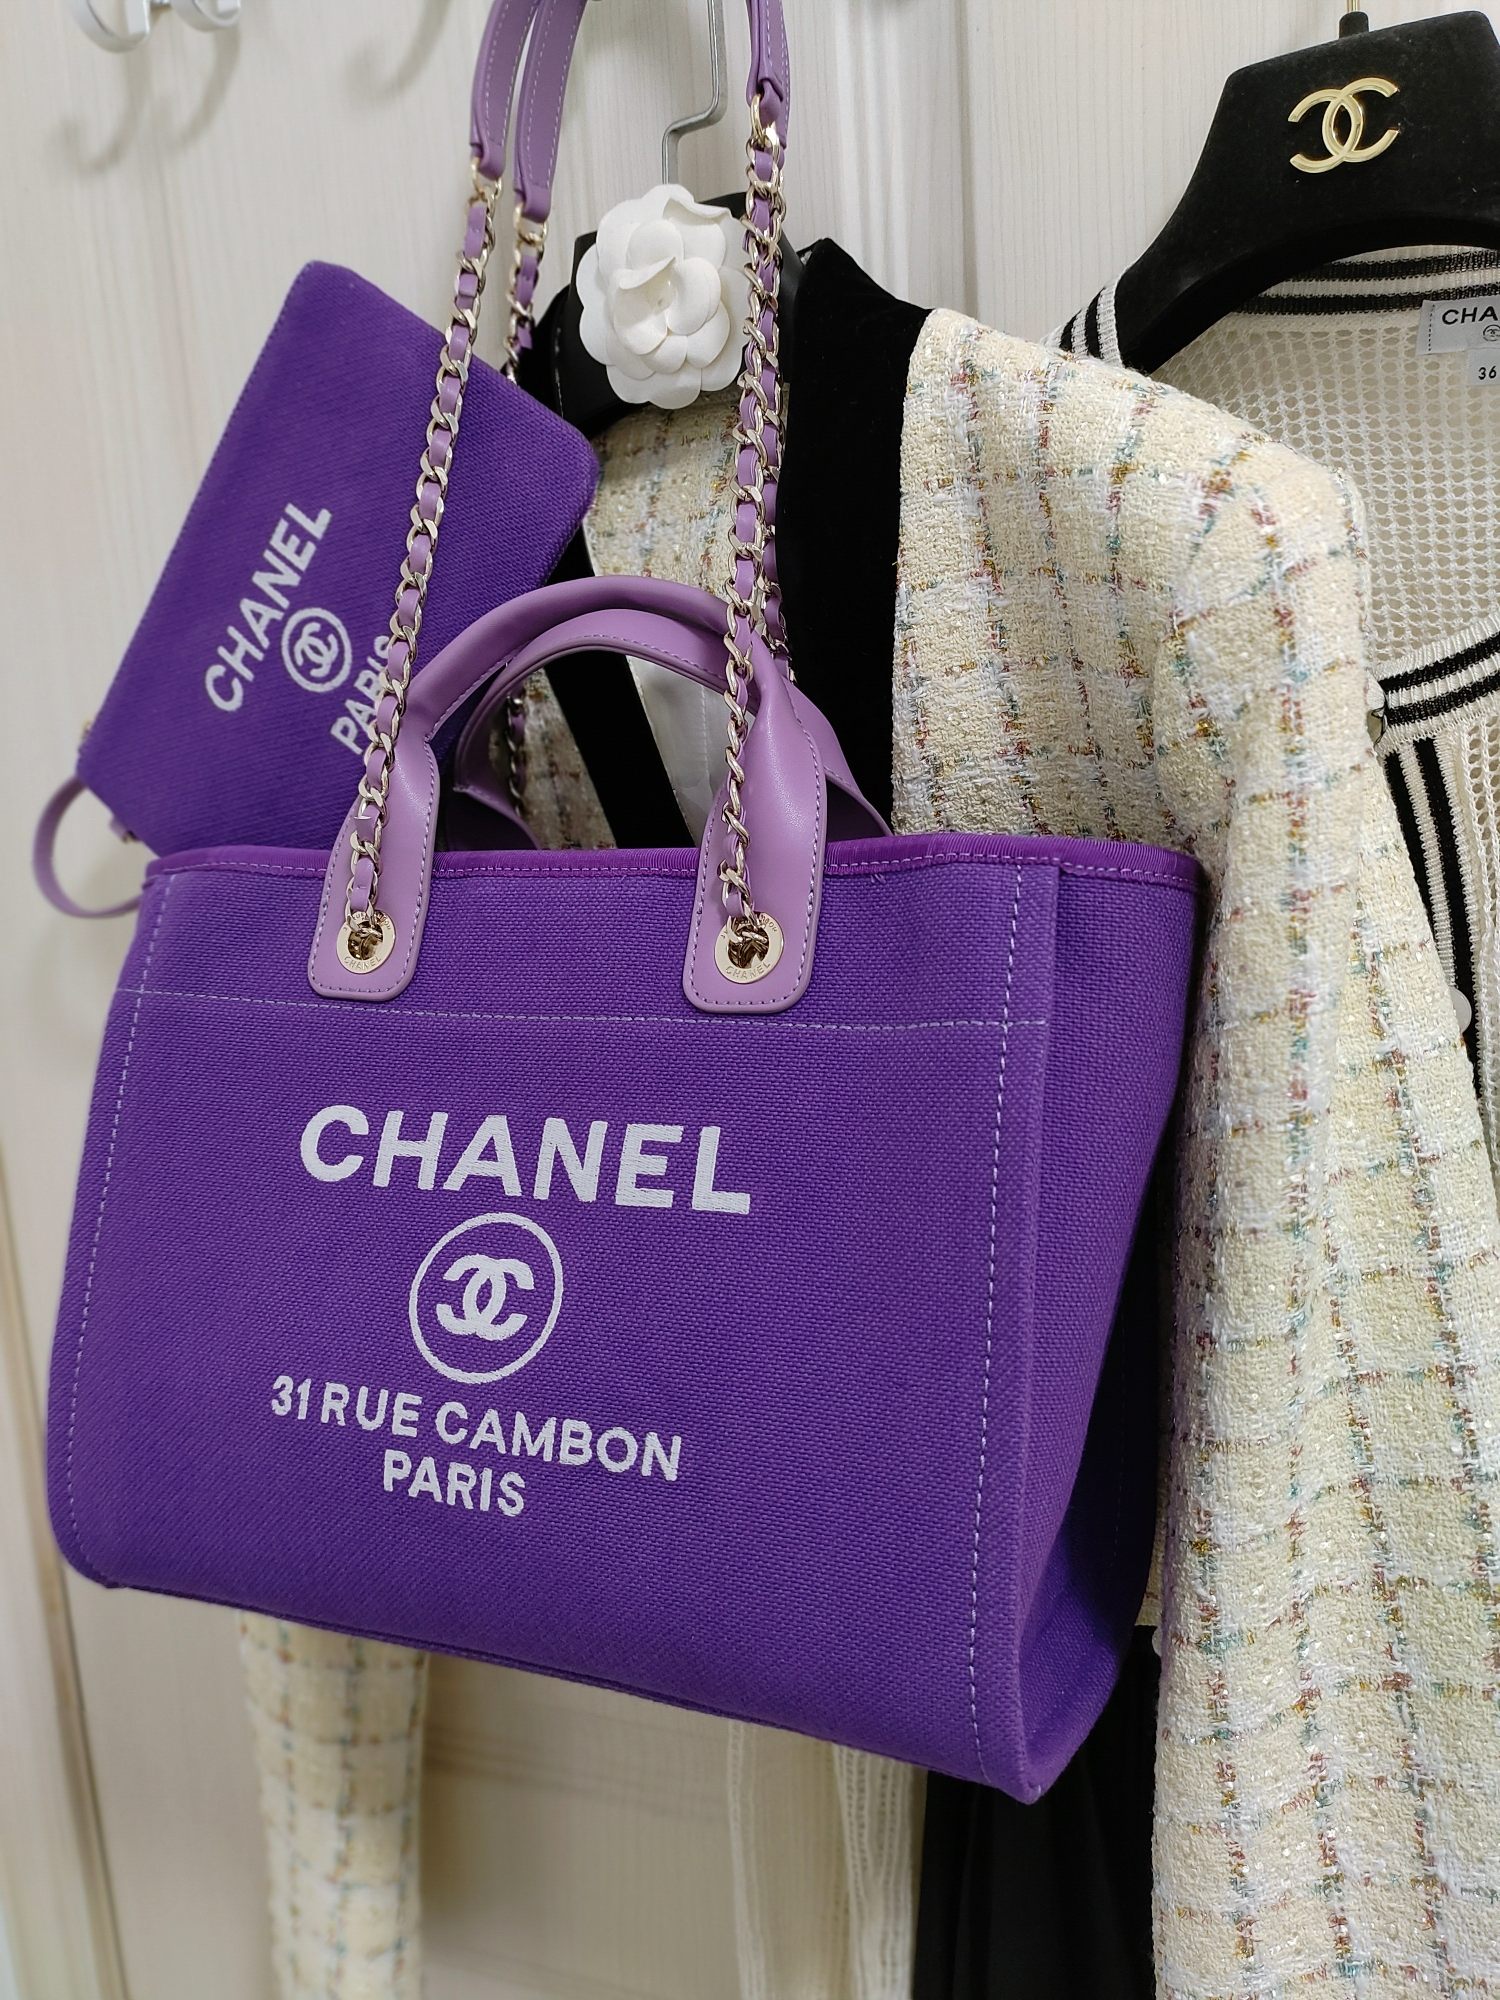 Chanel23B沙滩包️新色罗兰紫32cm出货梦幻紫色调明艳又温柔